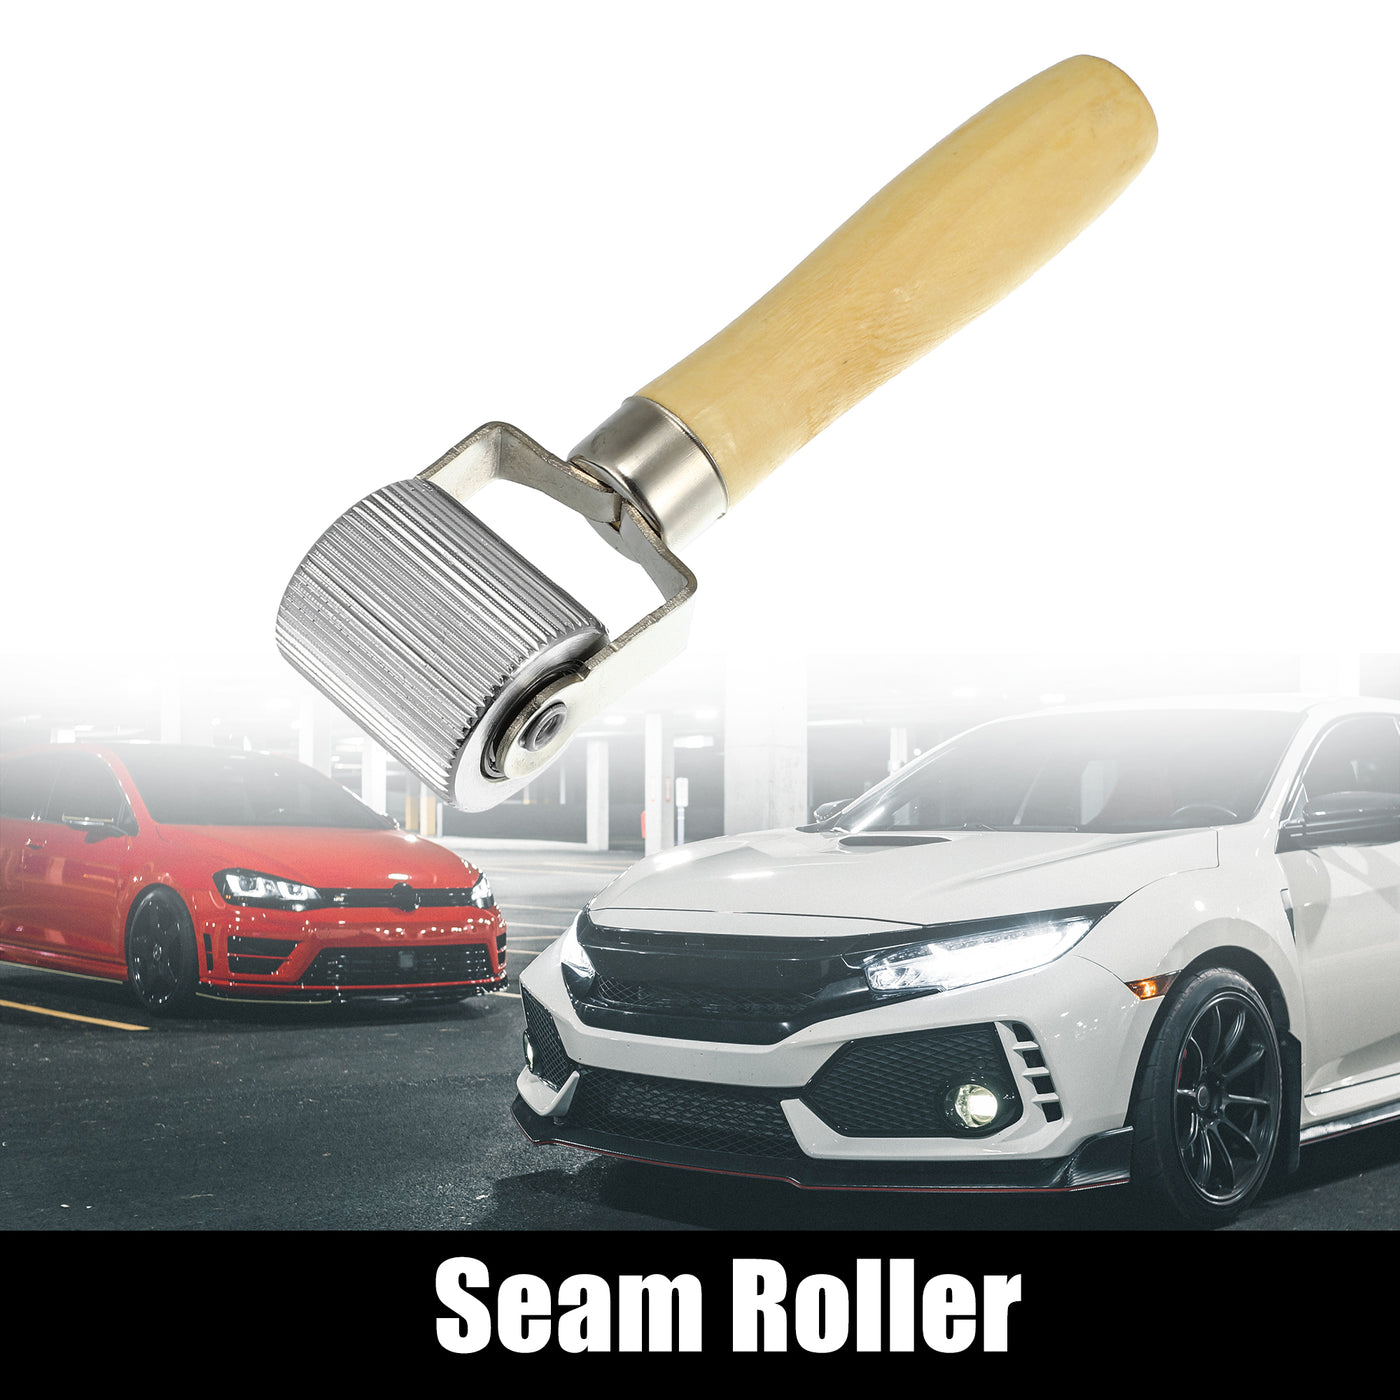 X AUTOHAUX Seam Roller 4cm Wallpaper Car Audio Sound Deadening Application Roller Tool for Auto Noise Wheel Hand Pressure Roller Metal Wooden Handle